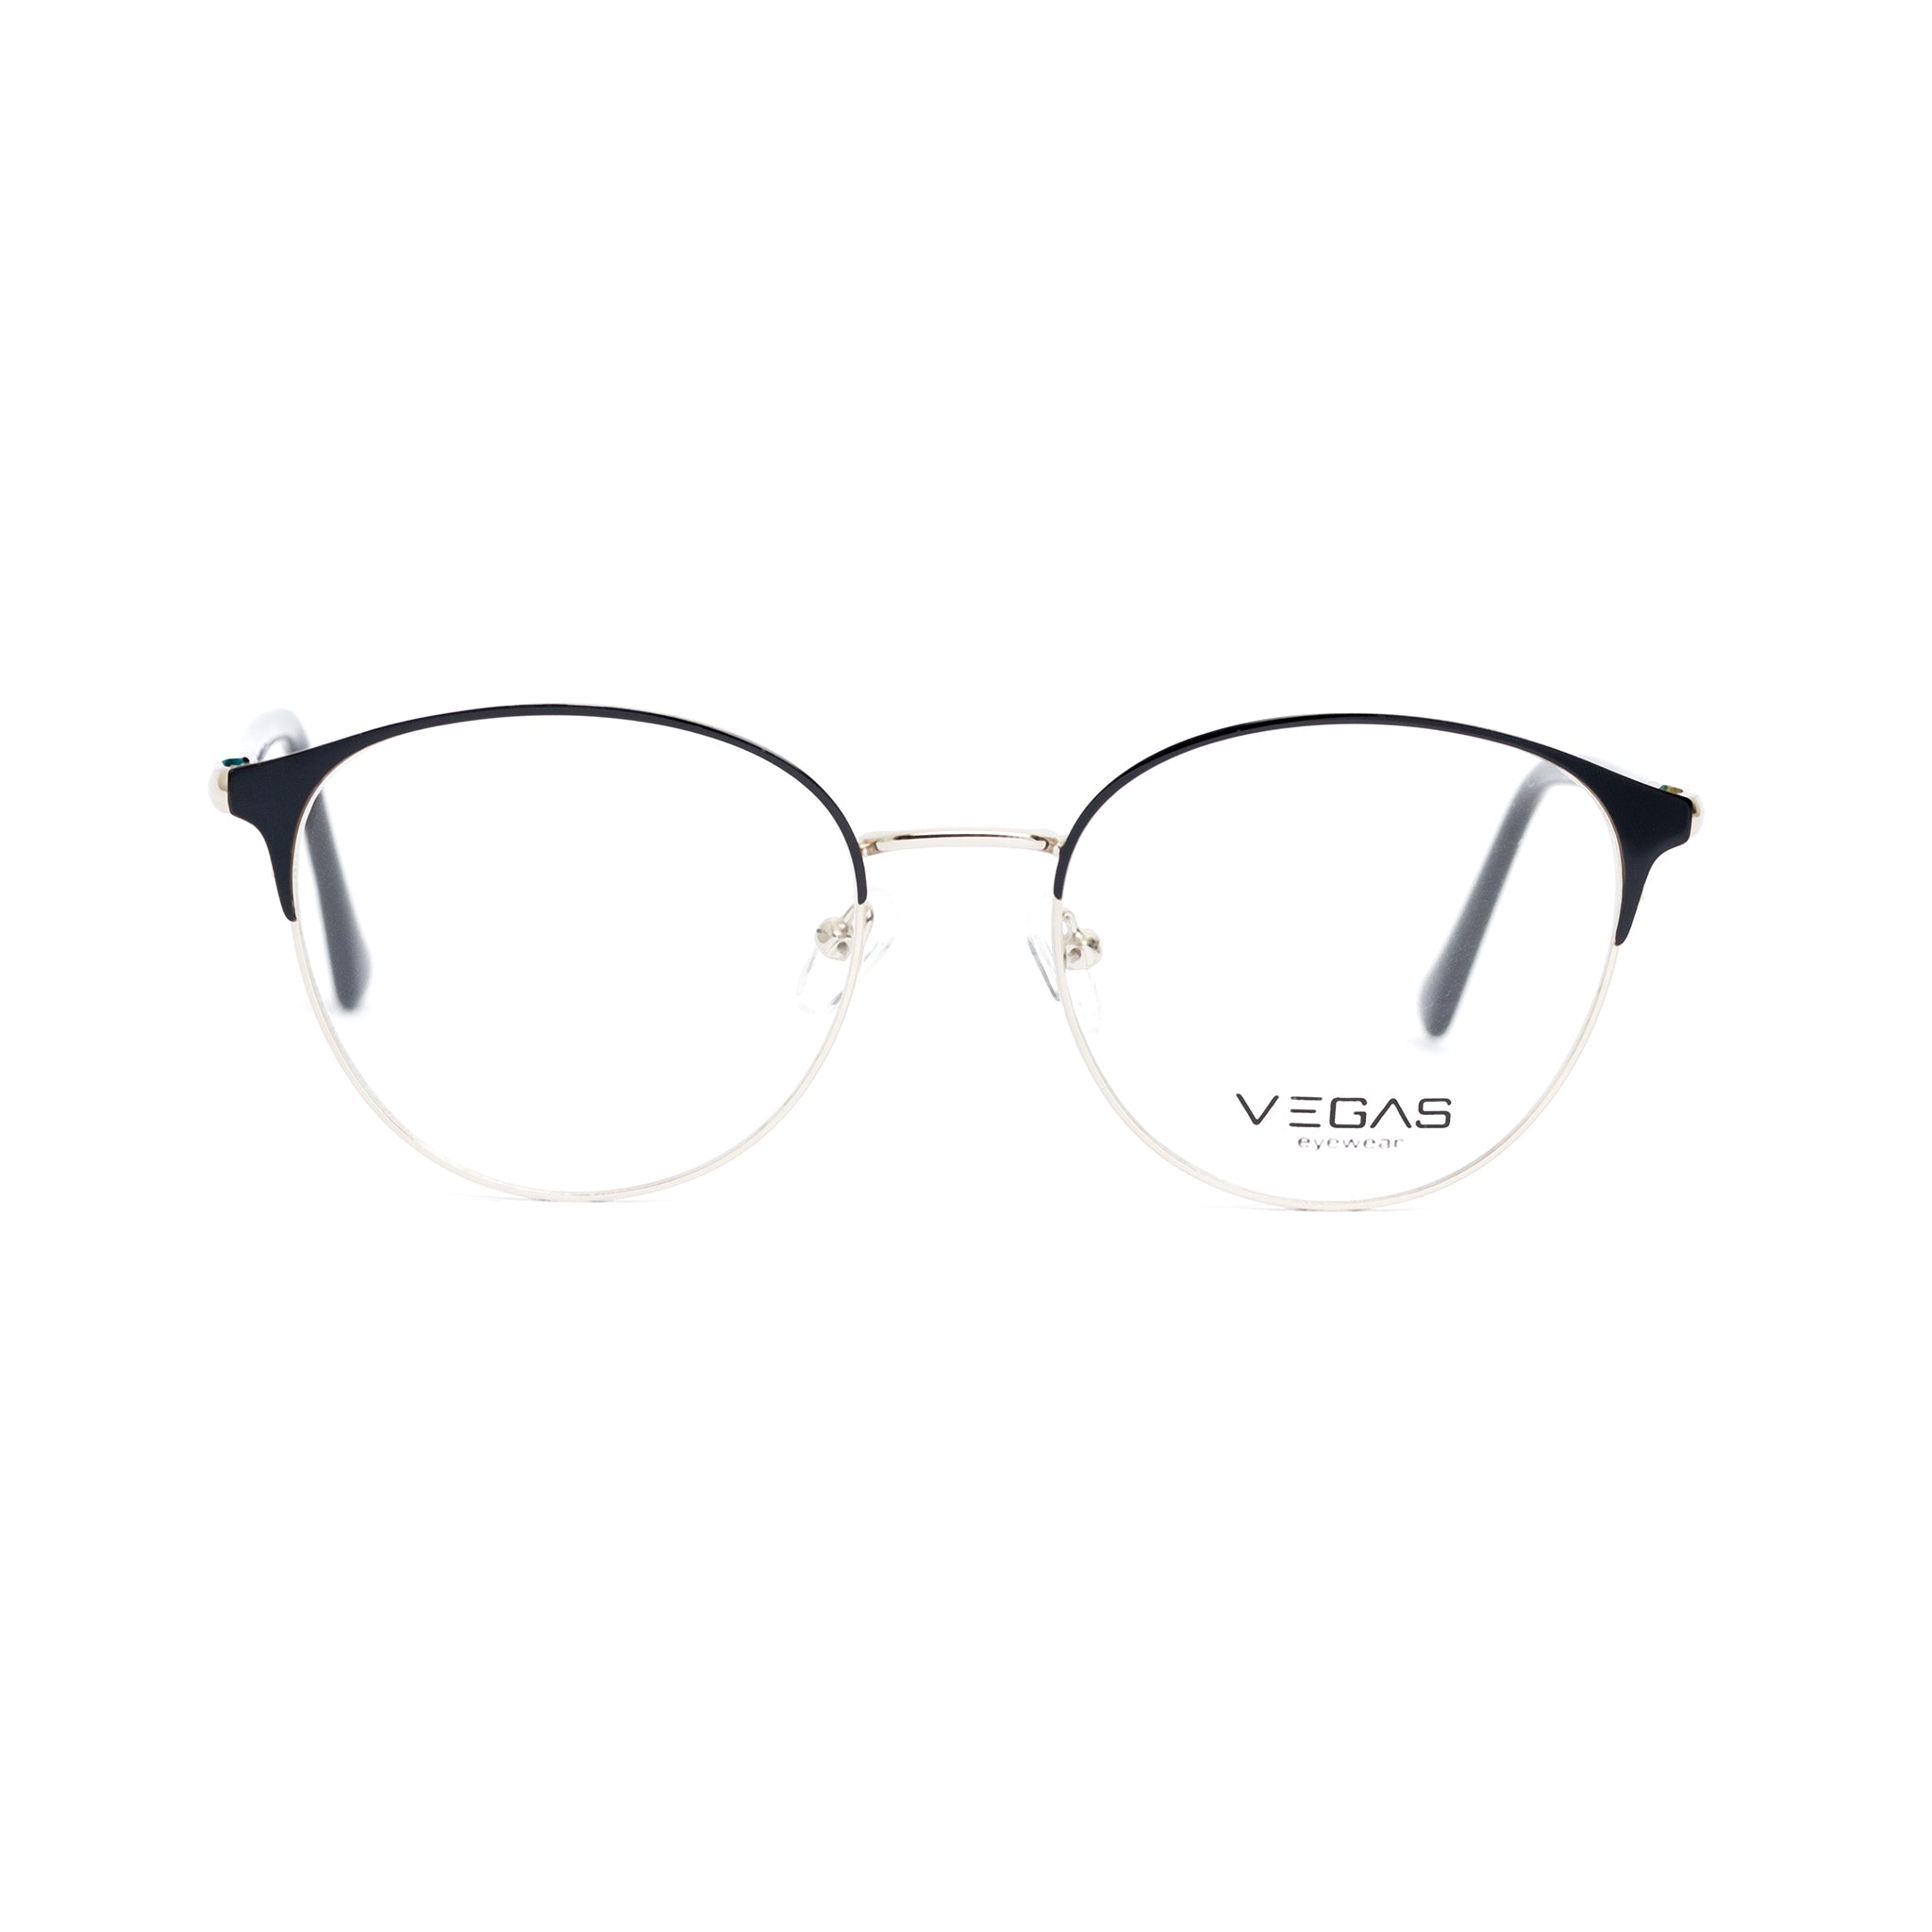 VEGAS LE6185z - COC Eyewear